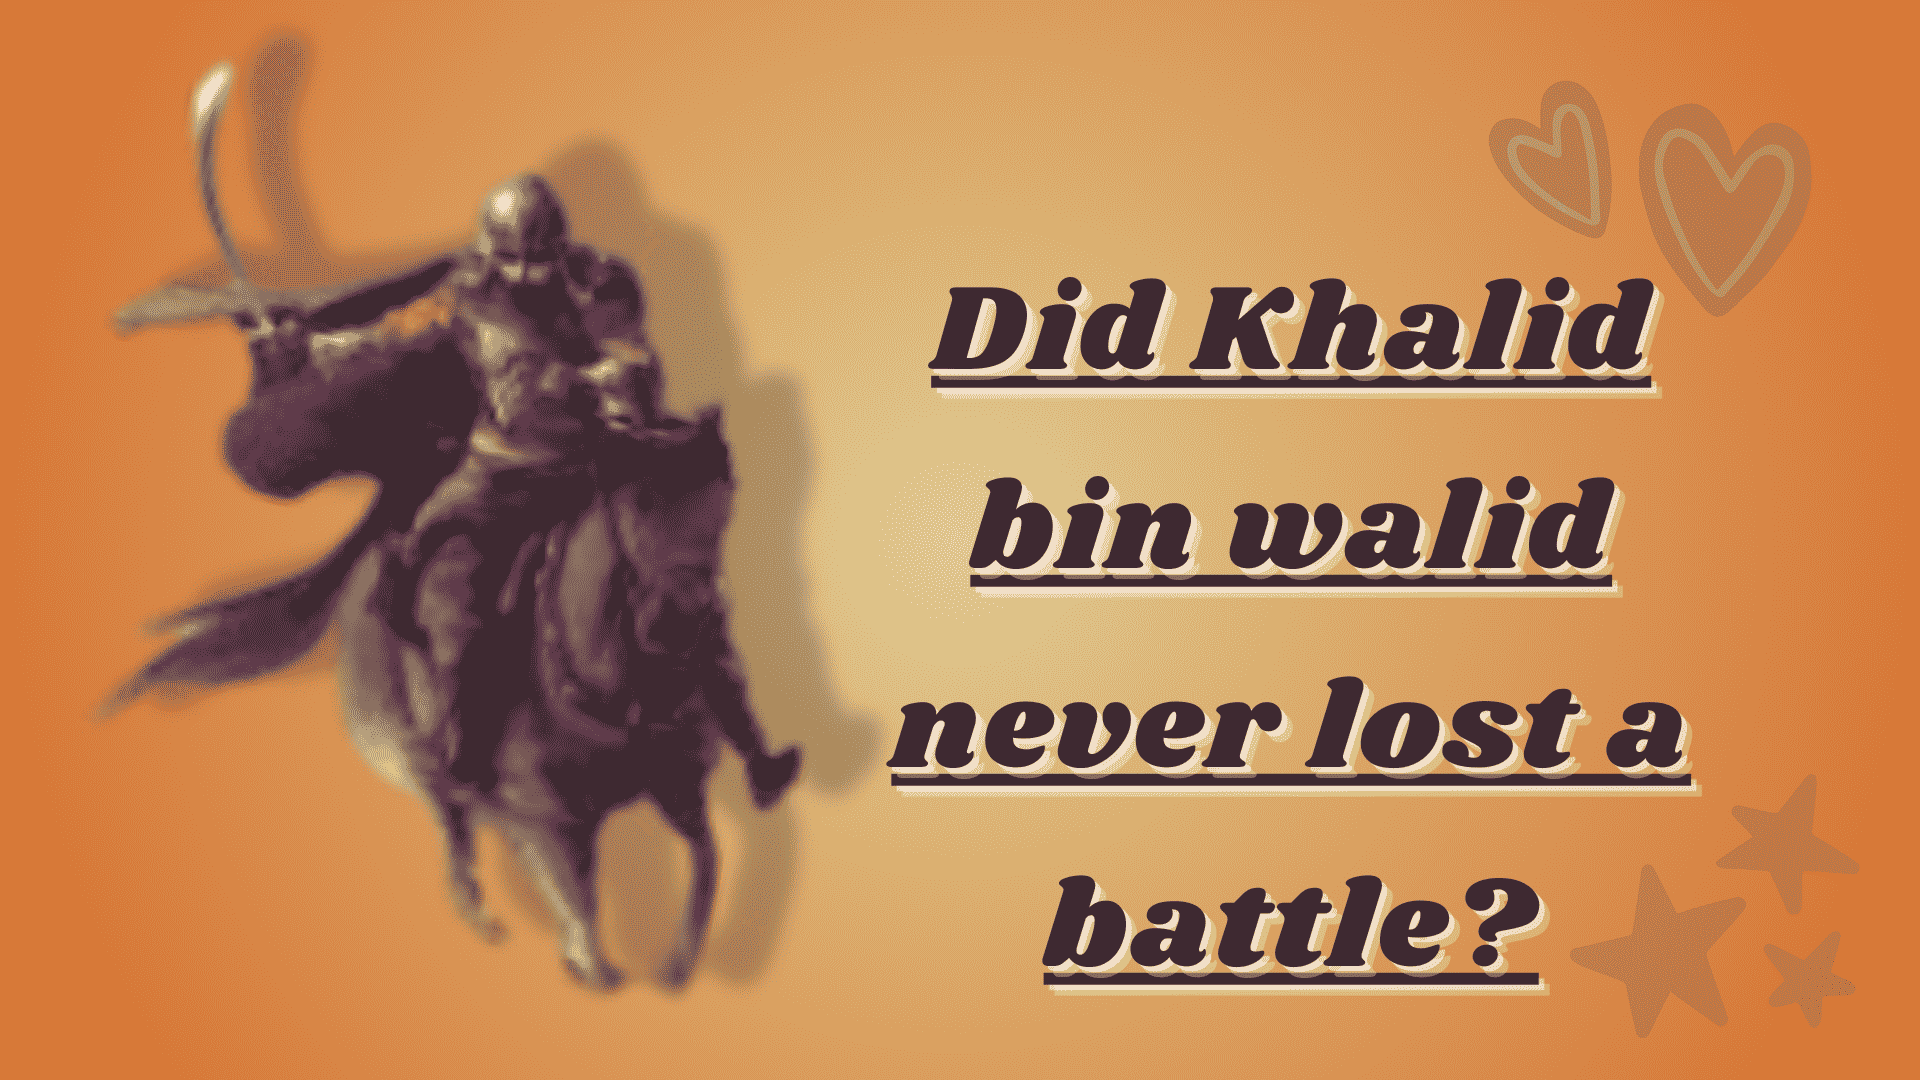 Did Khalid bin walid never lost a battle?